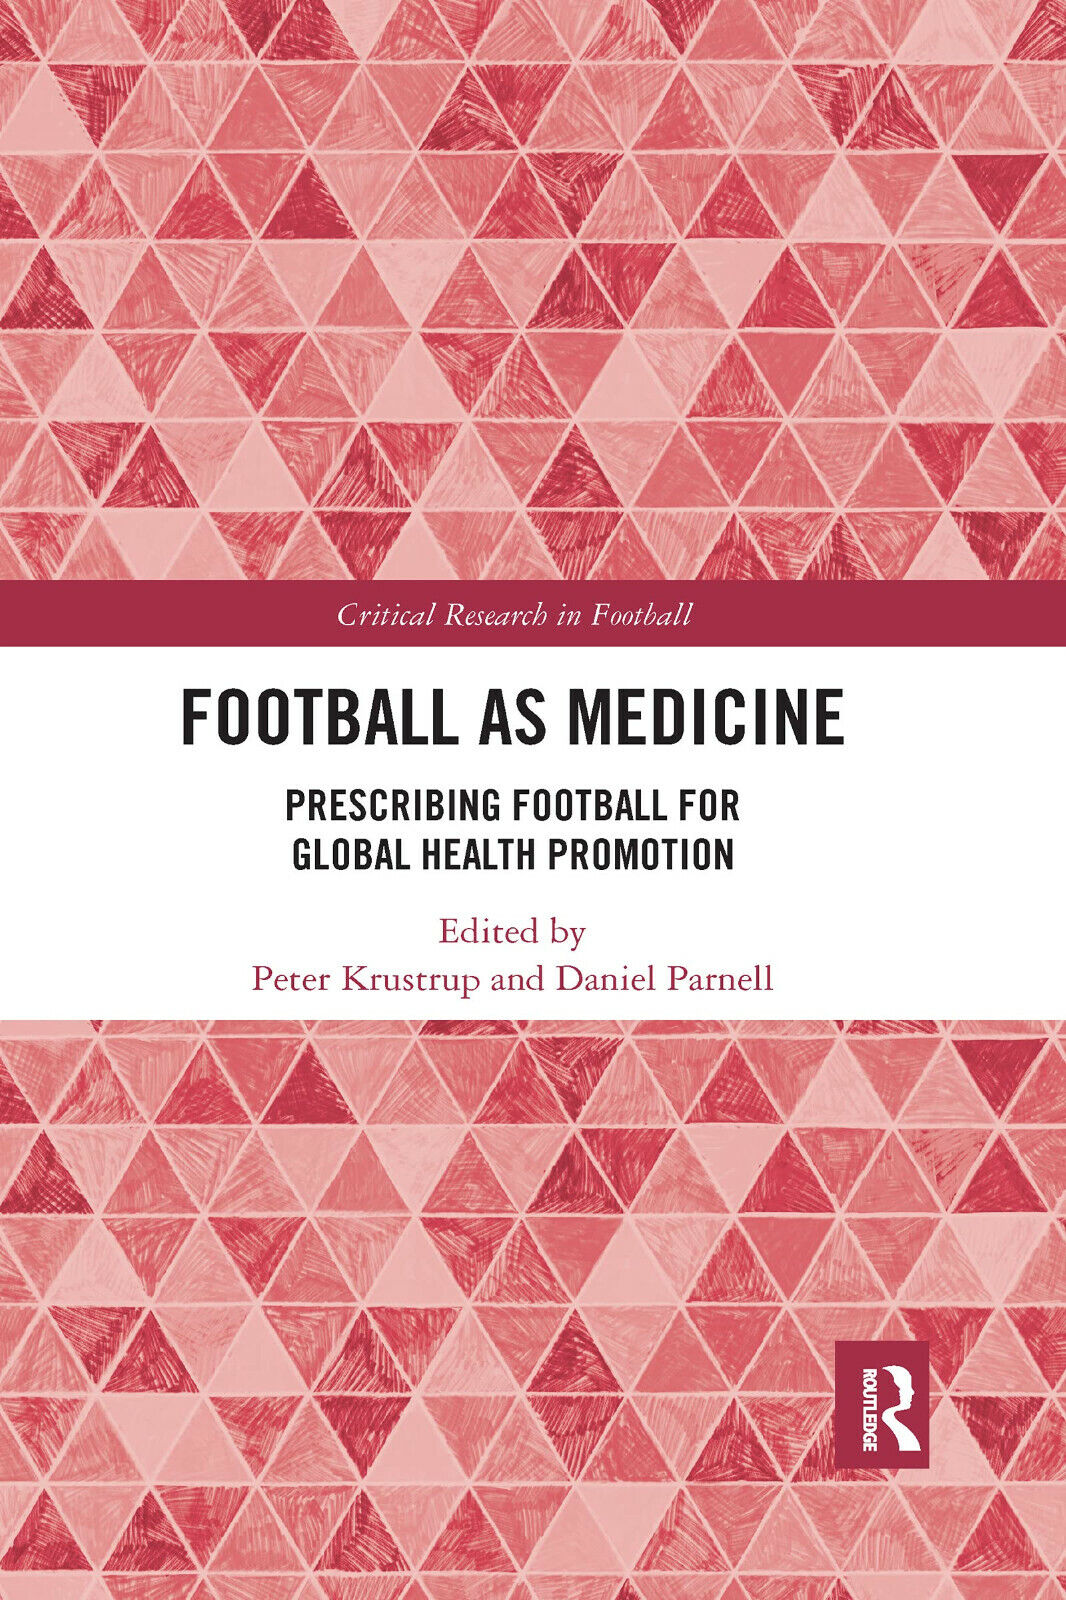 Football as Medicine - Peter Krustrup, Daniel Parnell - Routledge - 2021